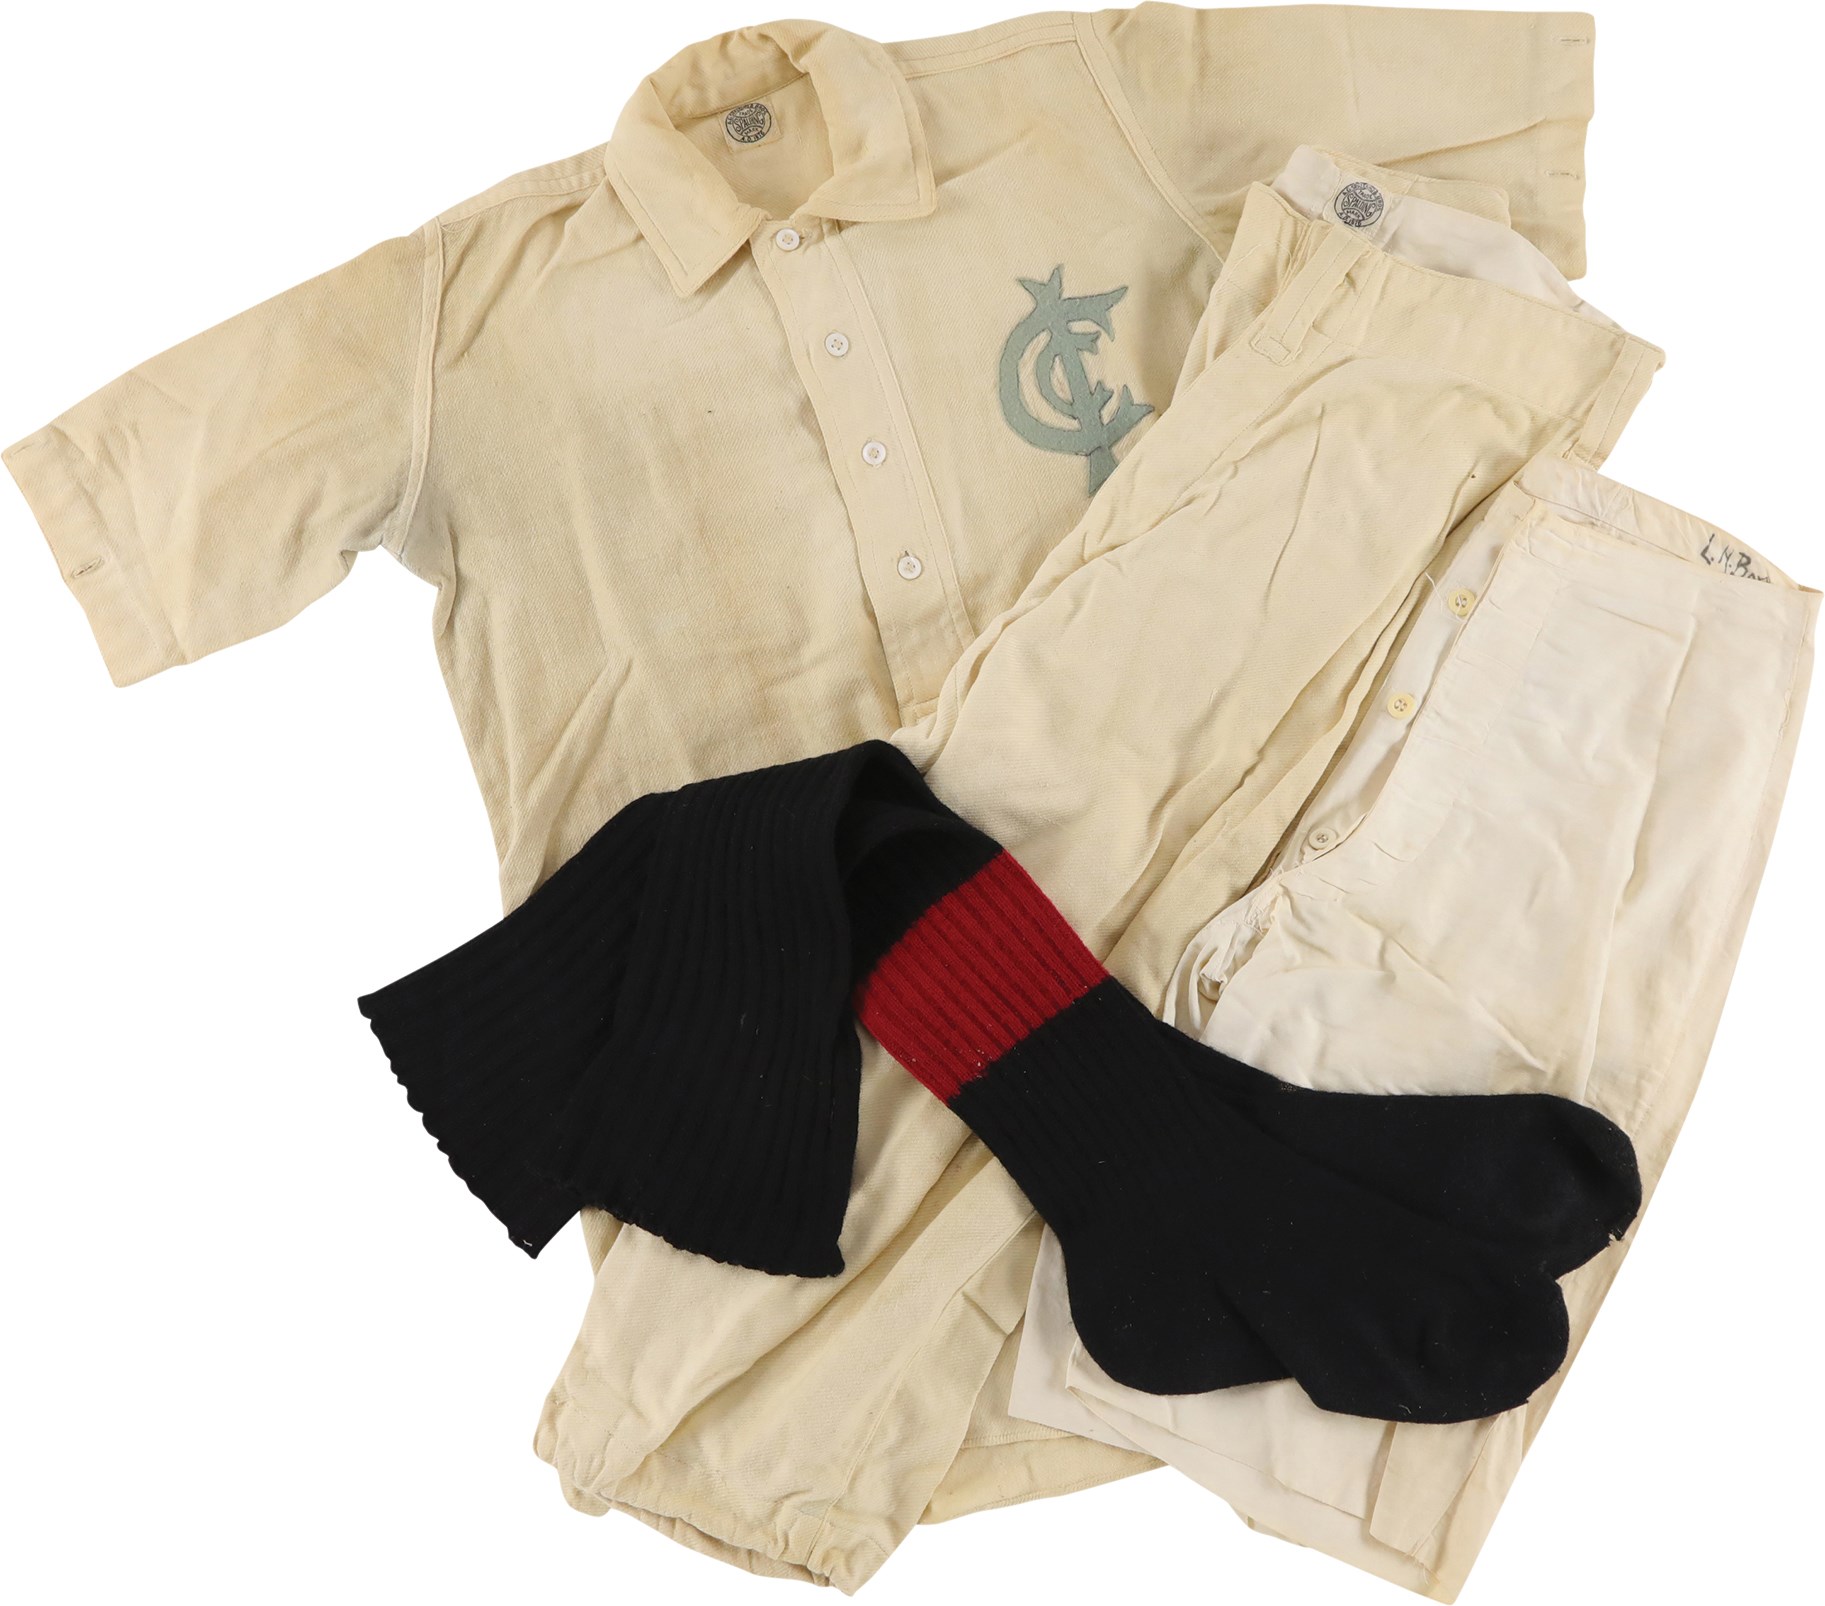 - Early 1900s Spalding Baseball Uniform